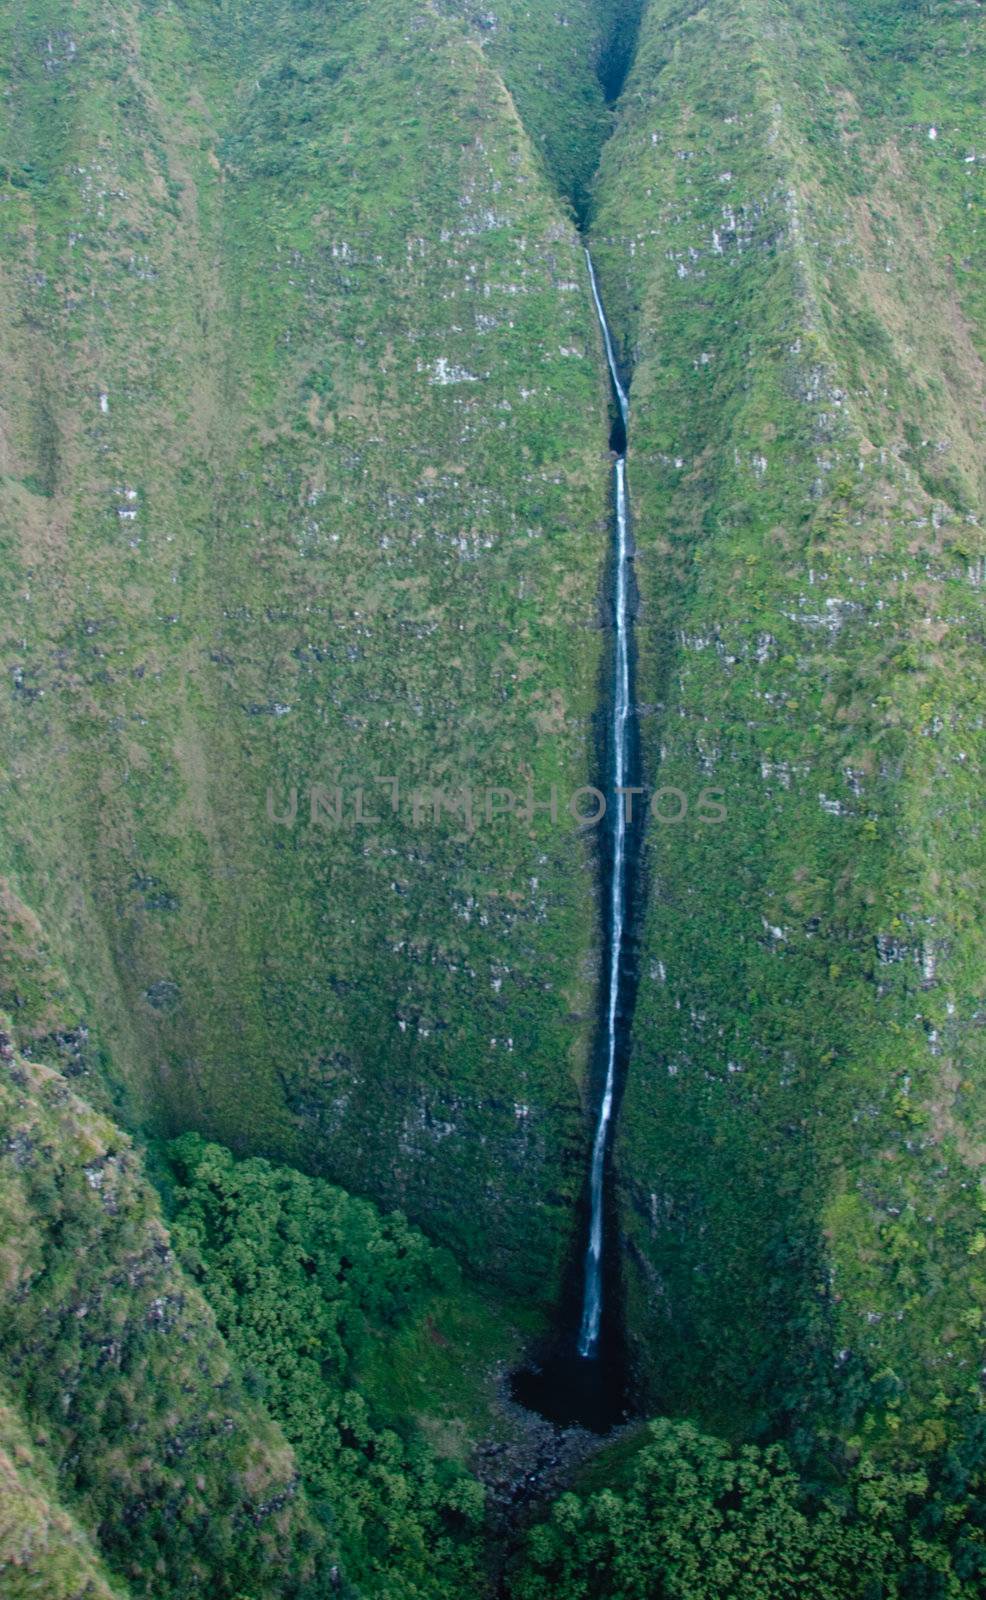 Waterfall streaming down the rock face of Mt Waialeale in Kauai